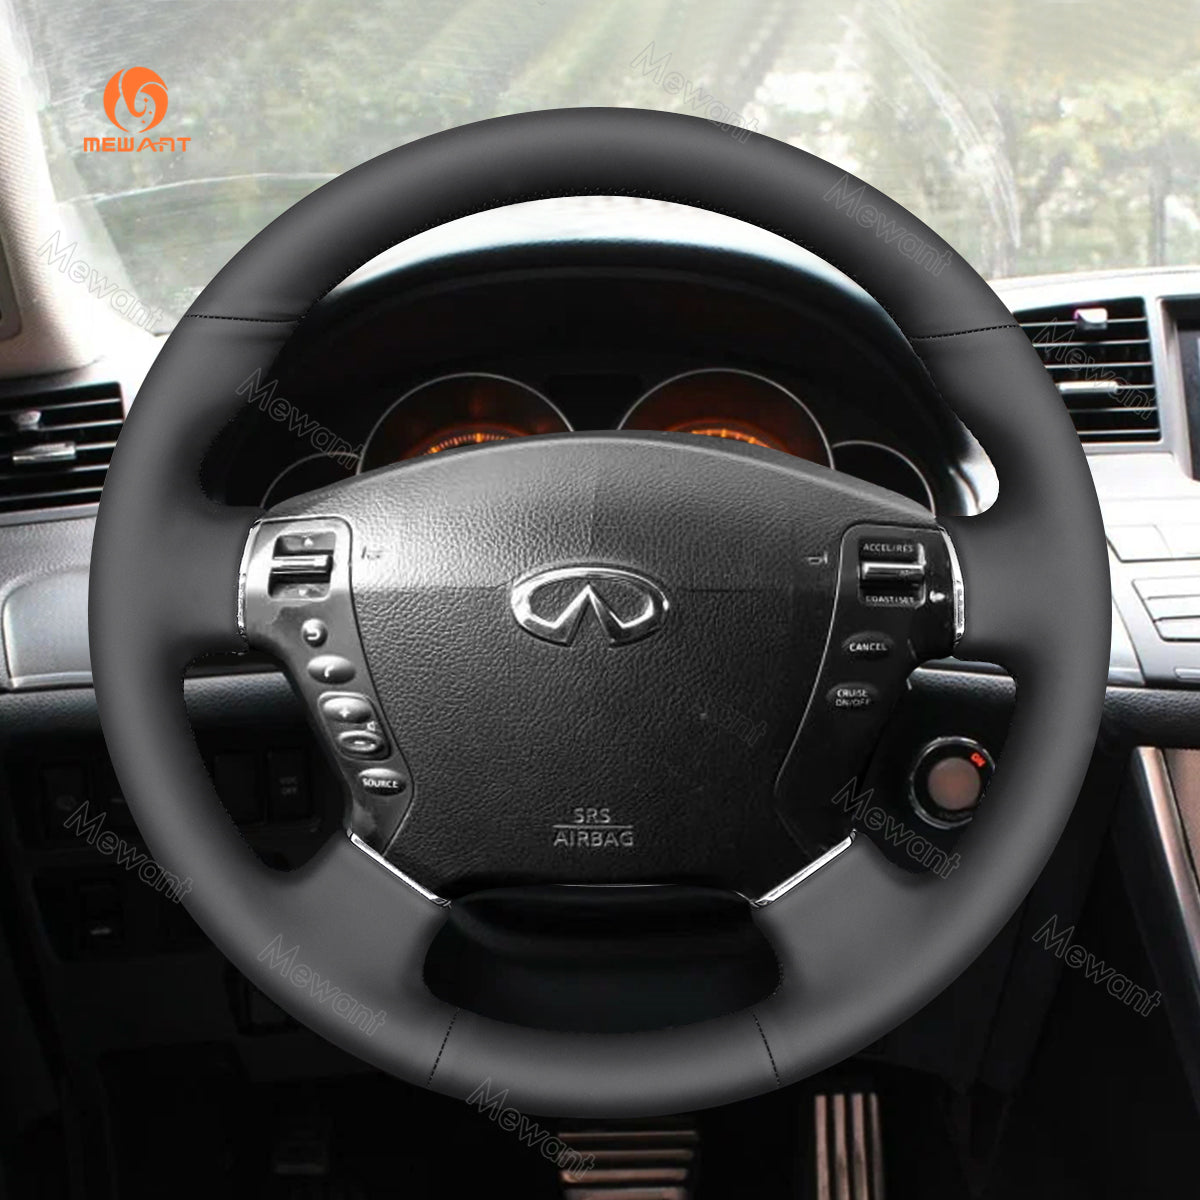 MEWANNT Hand Stitch Car Steering Wheel Cover for Nissan Fuga Cima 2002-2008